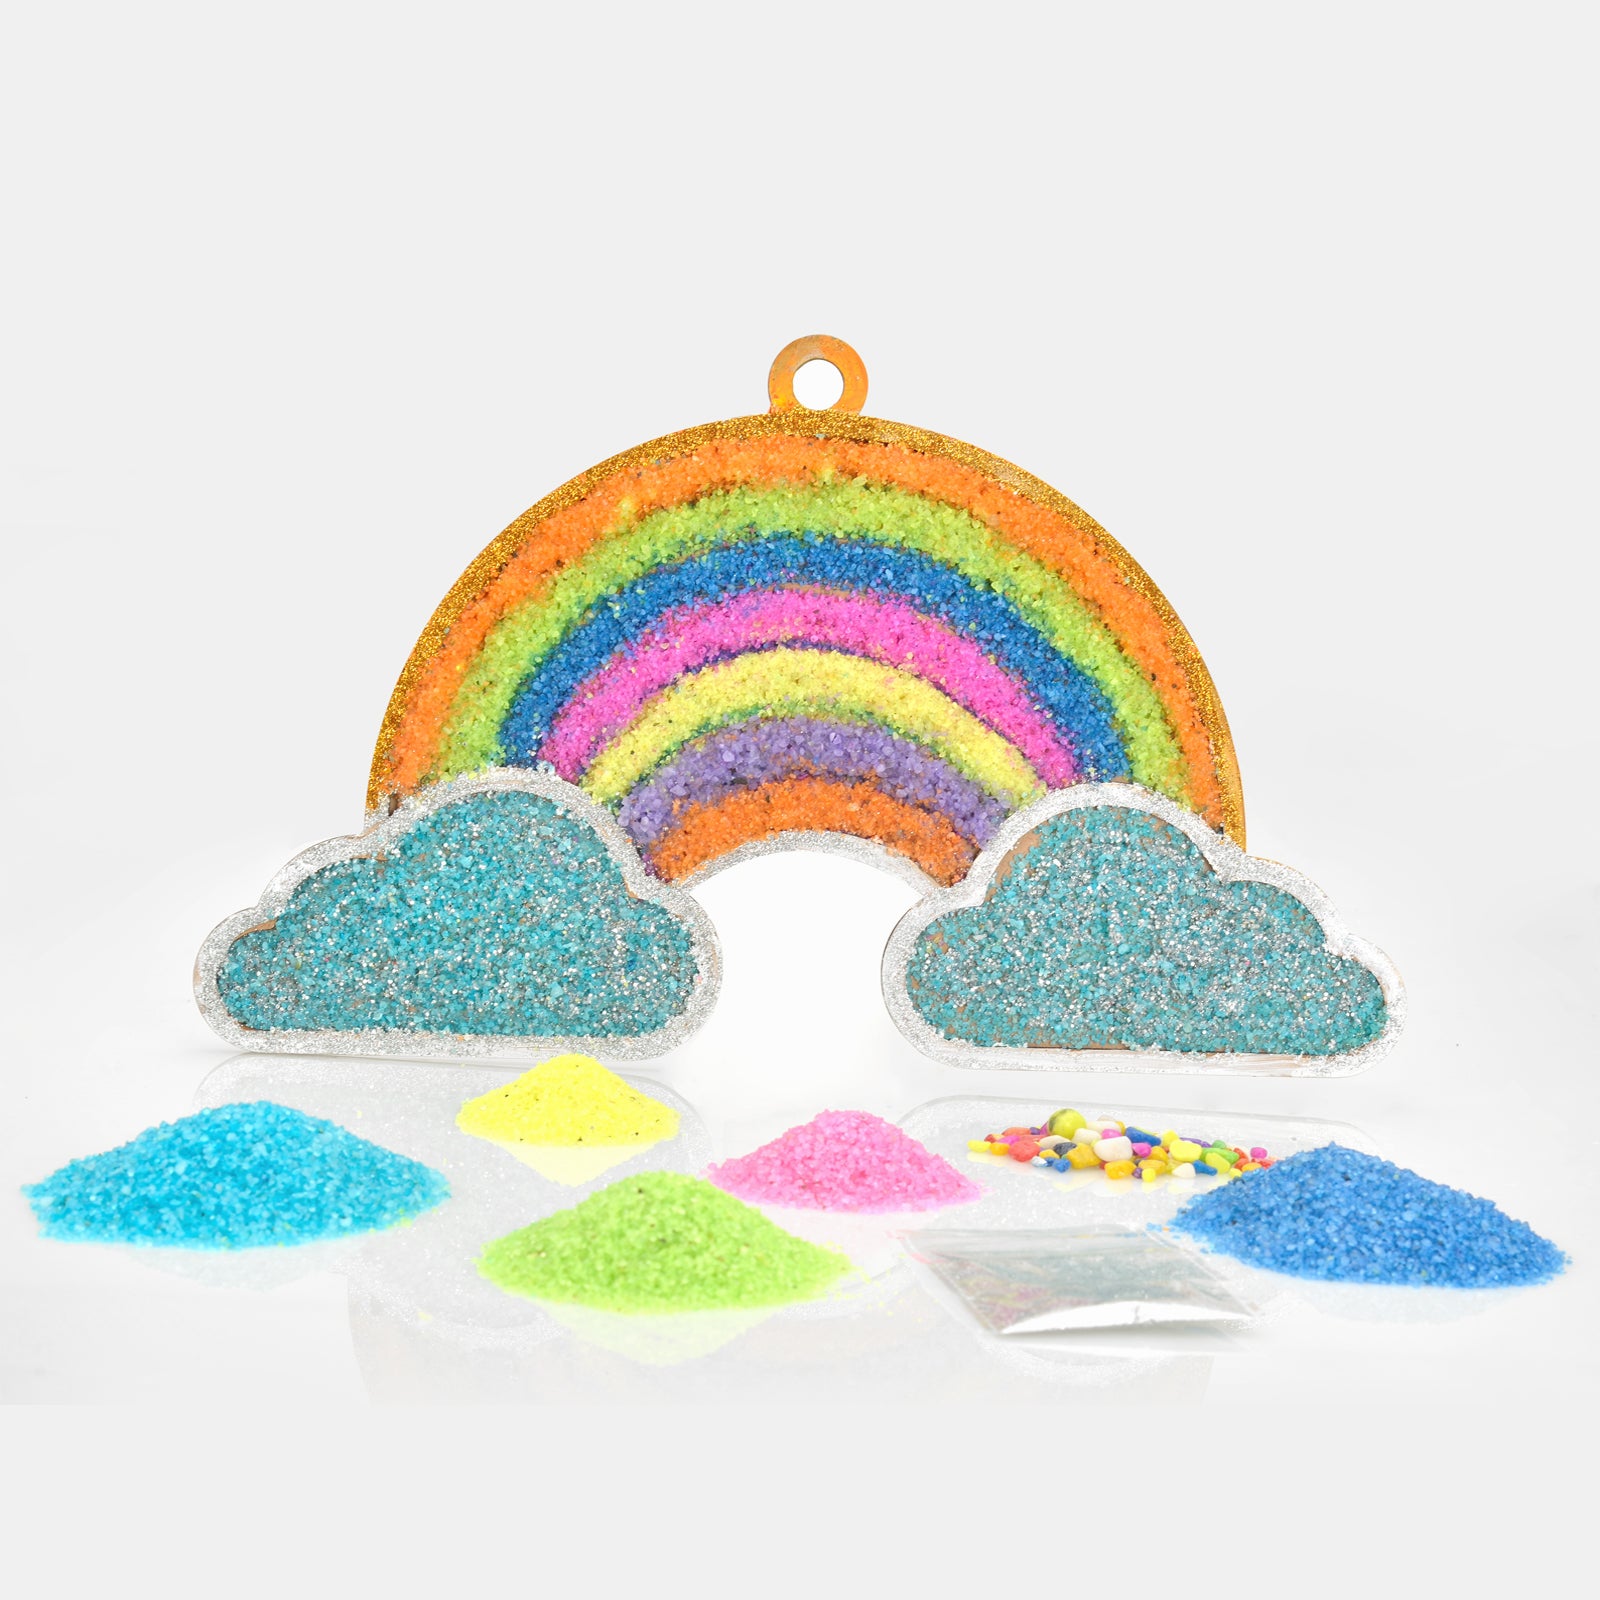 Rainbow Sand Art